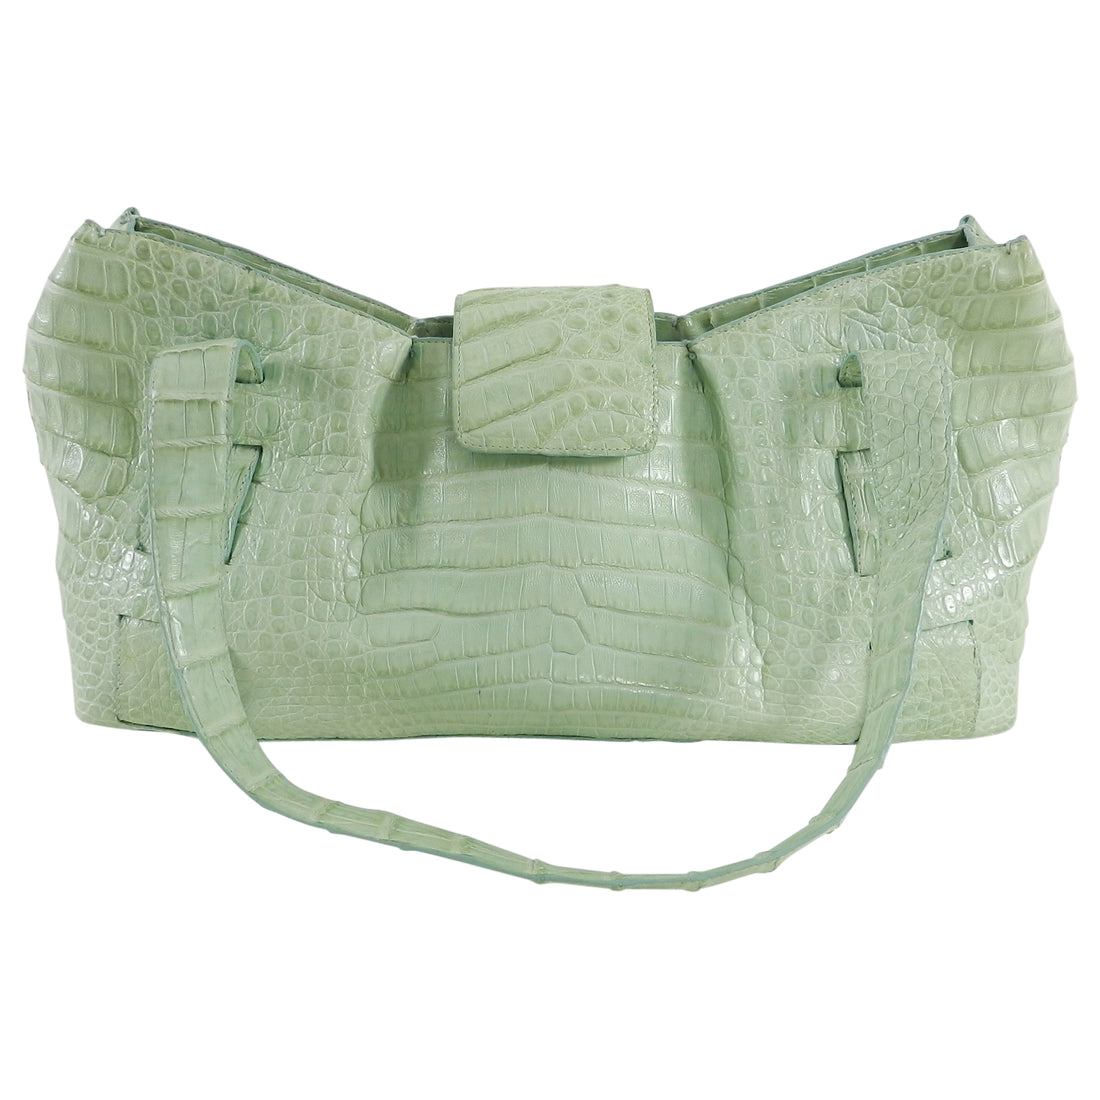 Nancy Gonzalez Mint Green Crocodile Shoulder Bag